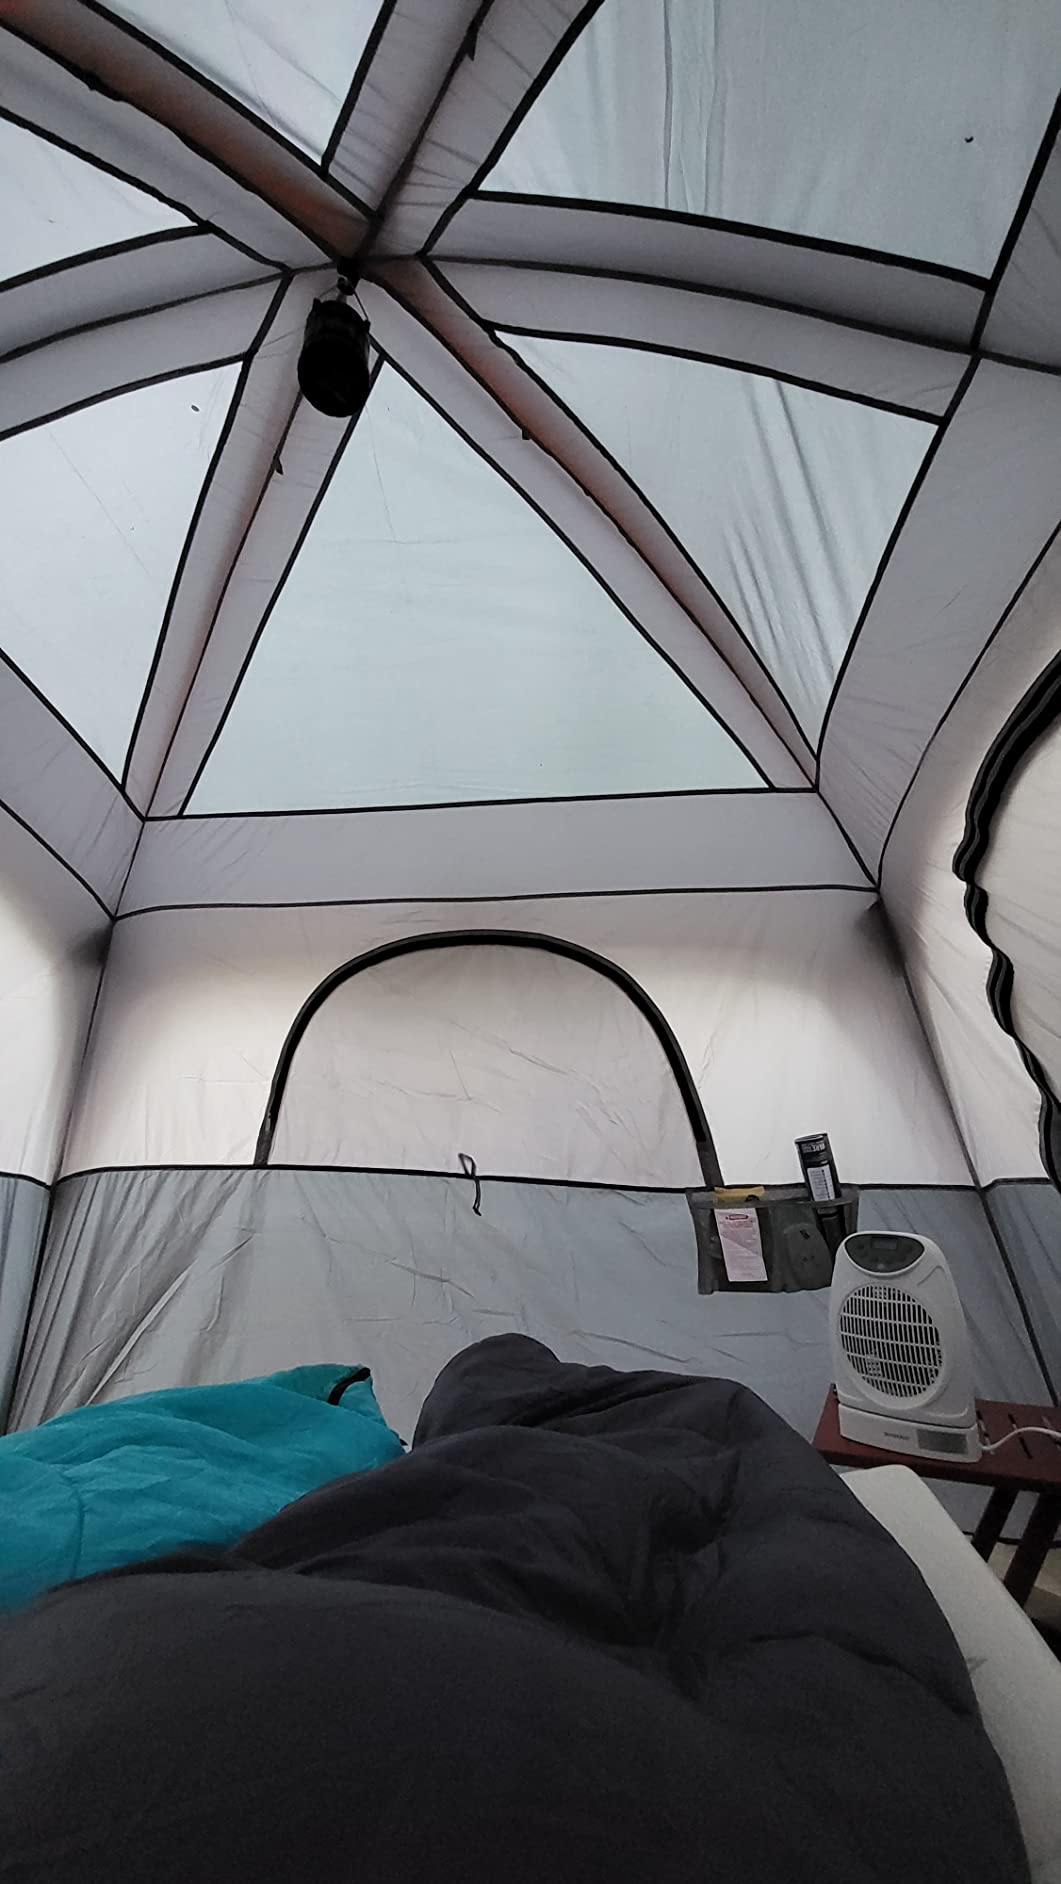 Good night's sleep while camping!